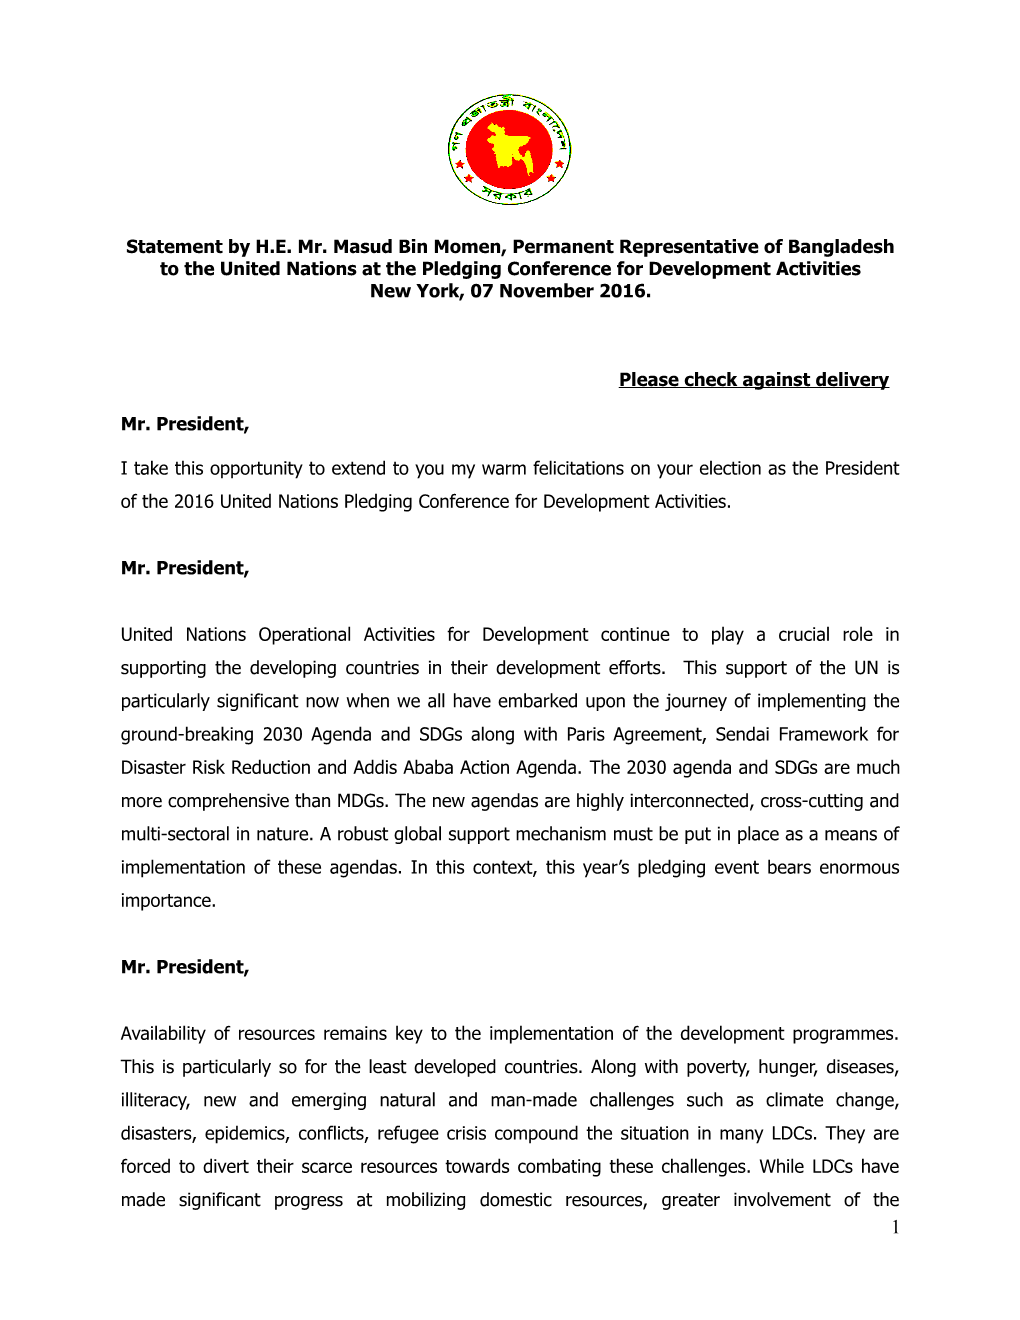 Statement by H.E. Mr. Masud Bin Momen, Permanent Representative of Bangladesh to the United